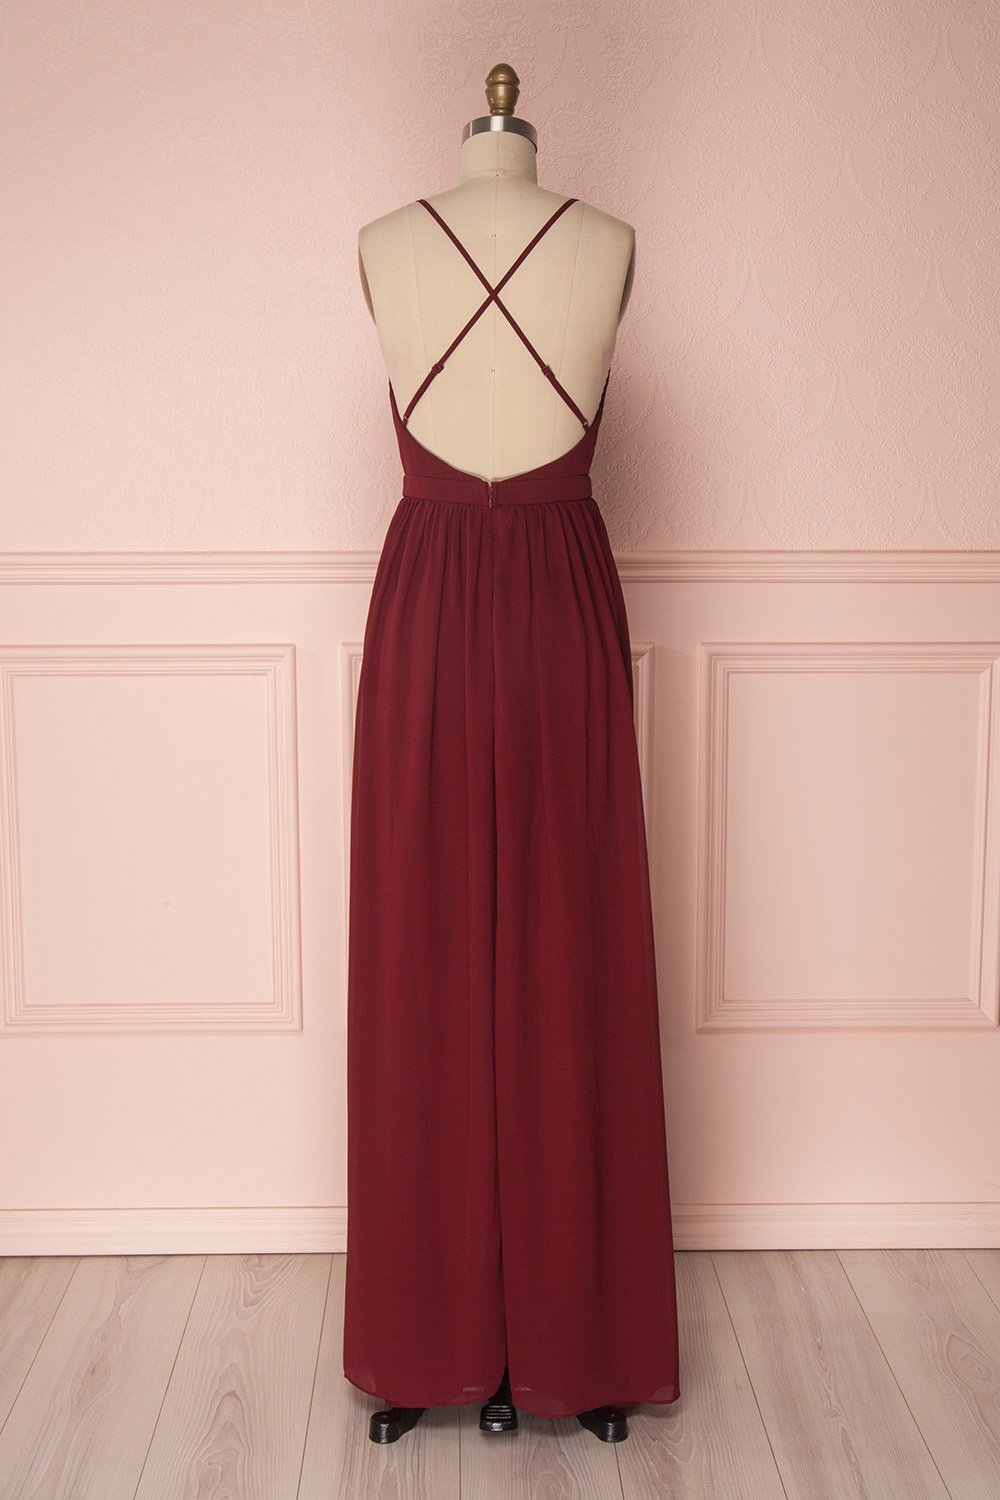 Simple burgundy chiffon long prom dress burgundy formal dress